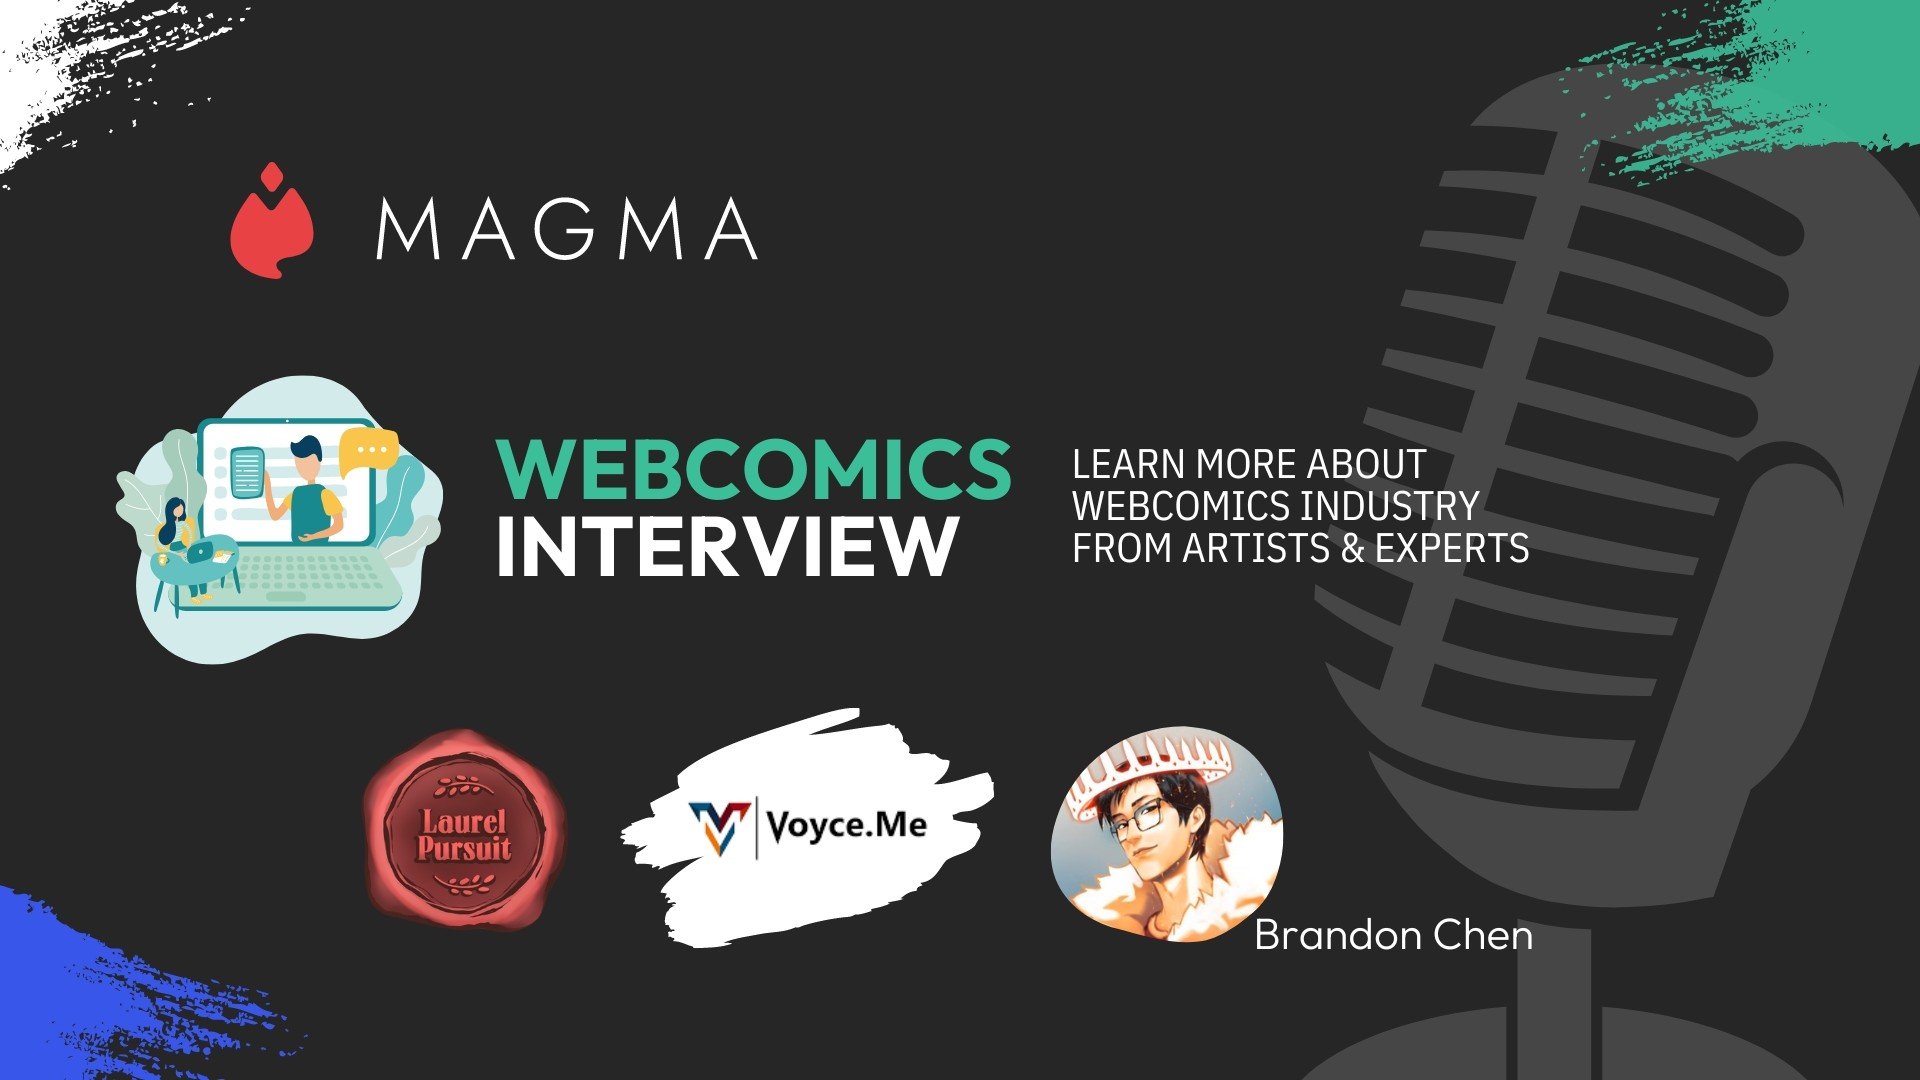 Magma talks Webcomics – Laurel Pursuit, Brandon Chen, Dylan Telano (CEO of Voyce.me) cover image